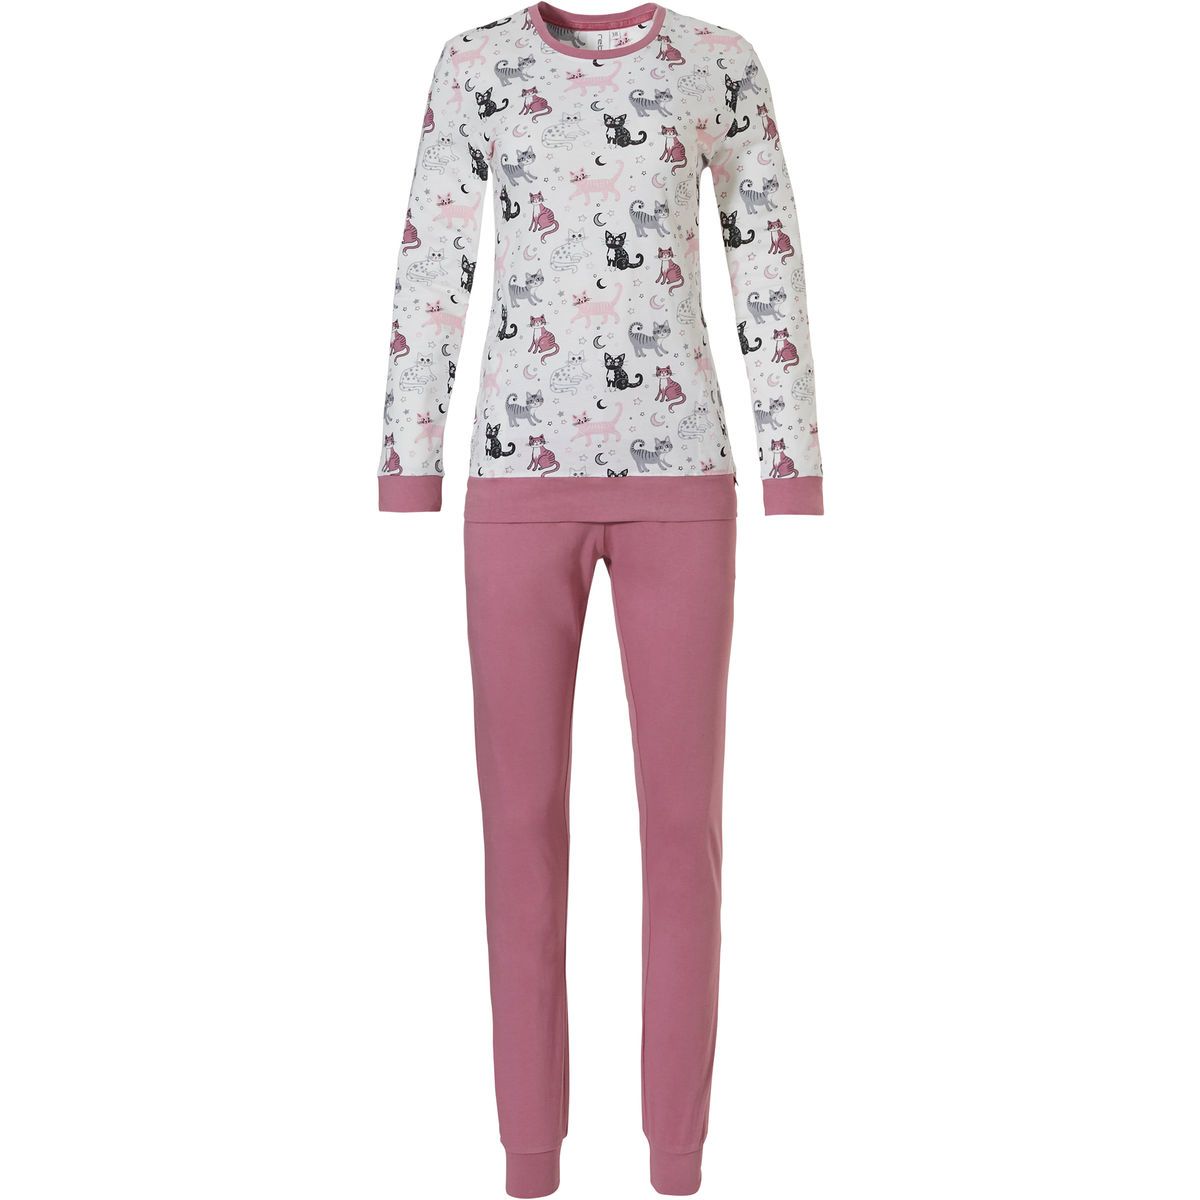 Kleding Dameskleding Pyjamas & Badjassen Sets cadeau voor vriendin / familie home wear dikke fleece lounge dragen wit / roze lounge bijpassende set 2 stuks zoete en schattige kat patroon dagelijkse outfits 